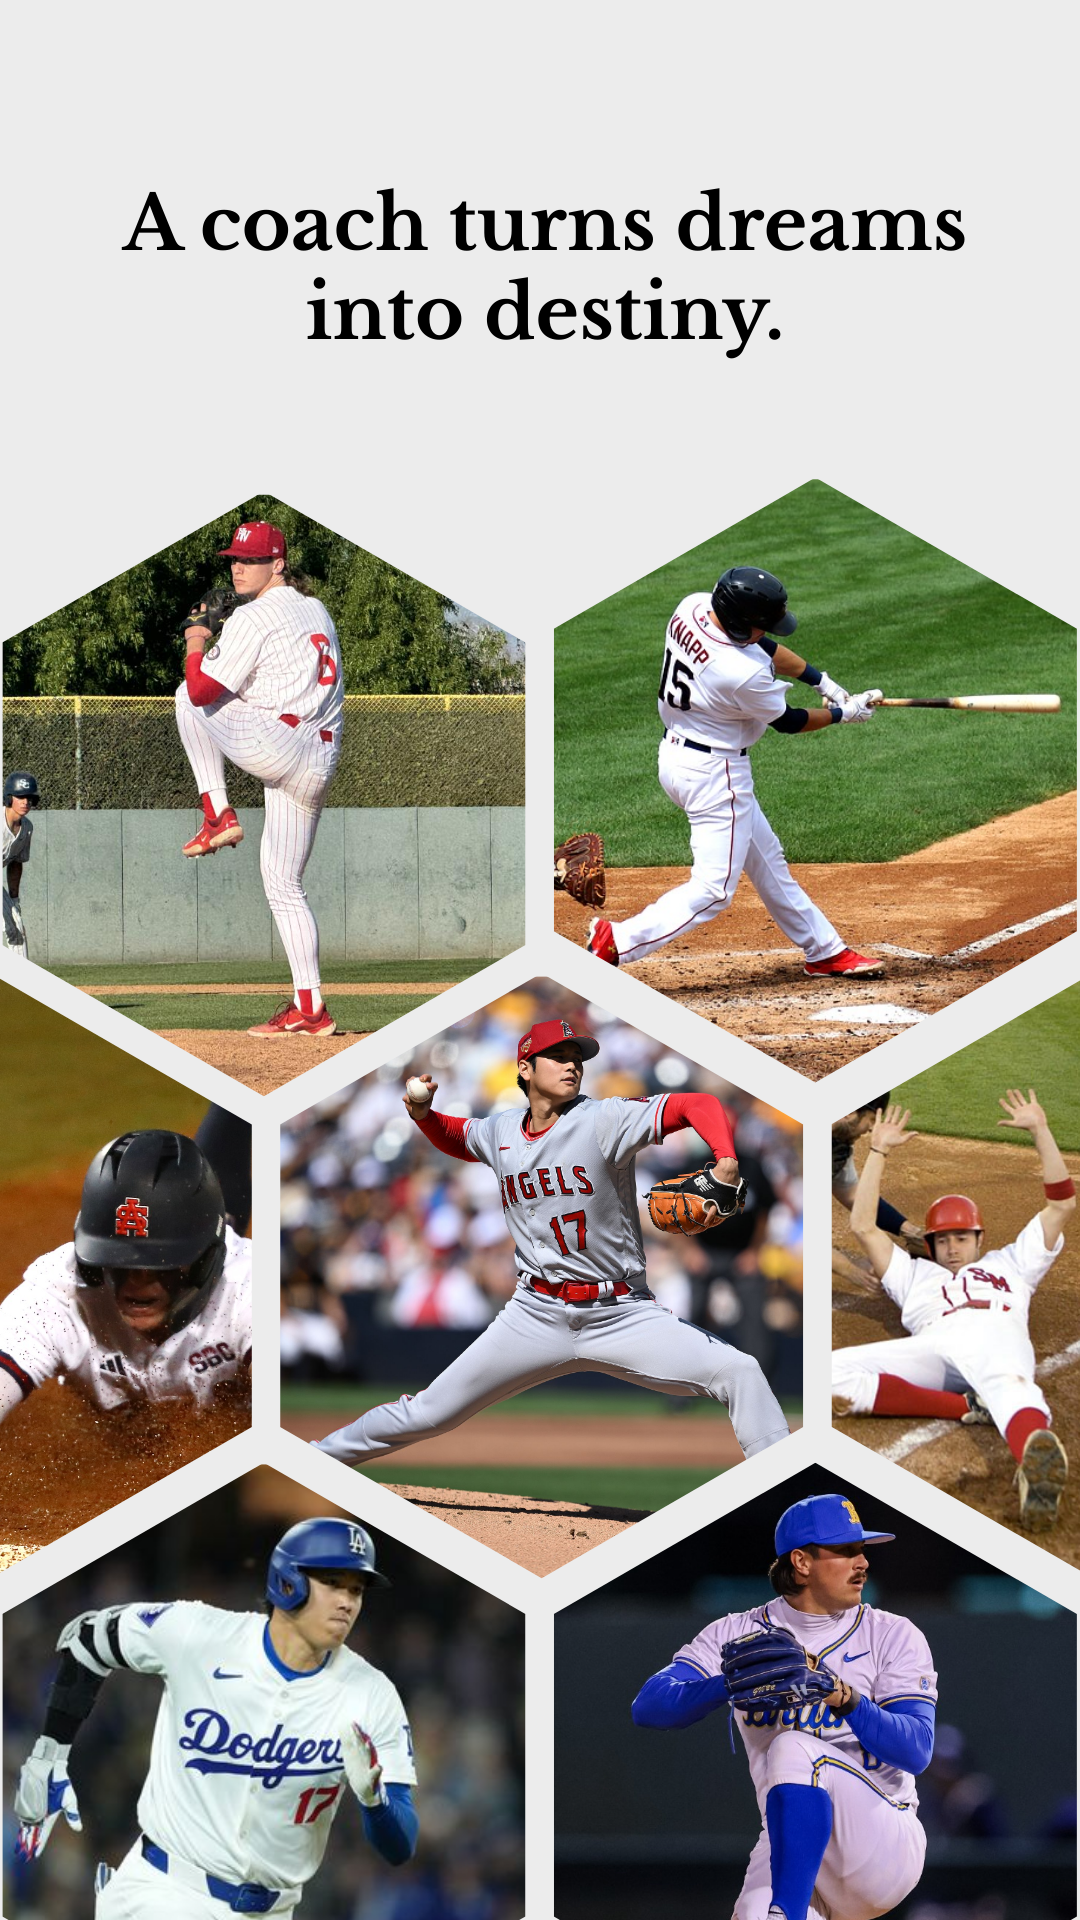 Baseball Photo Collage